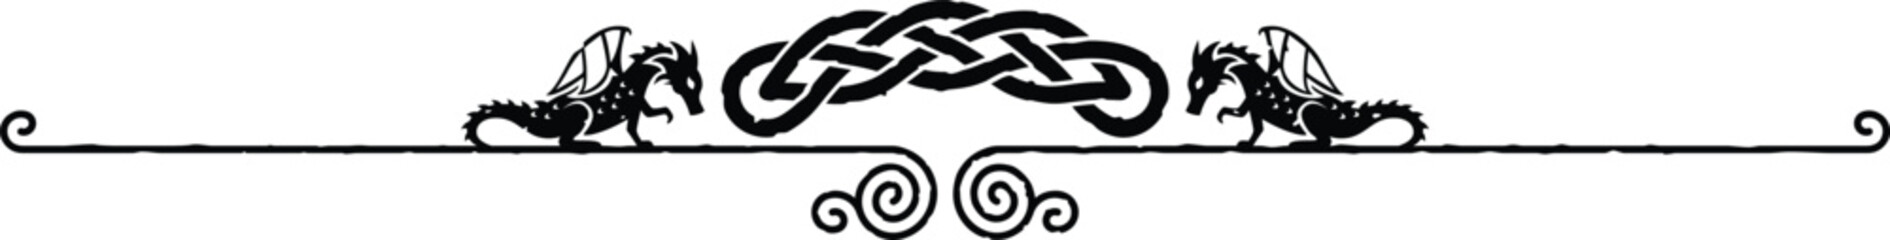 Elegant Header Footer - Curved Celtic Knot and Dragons